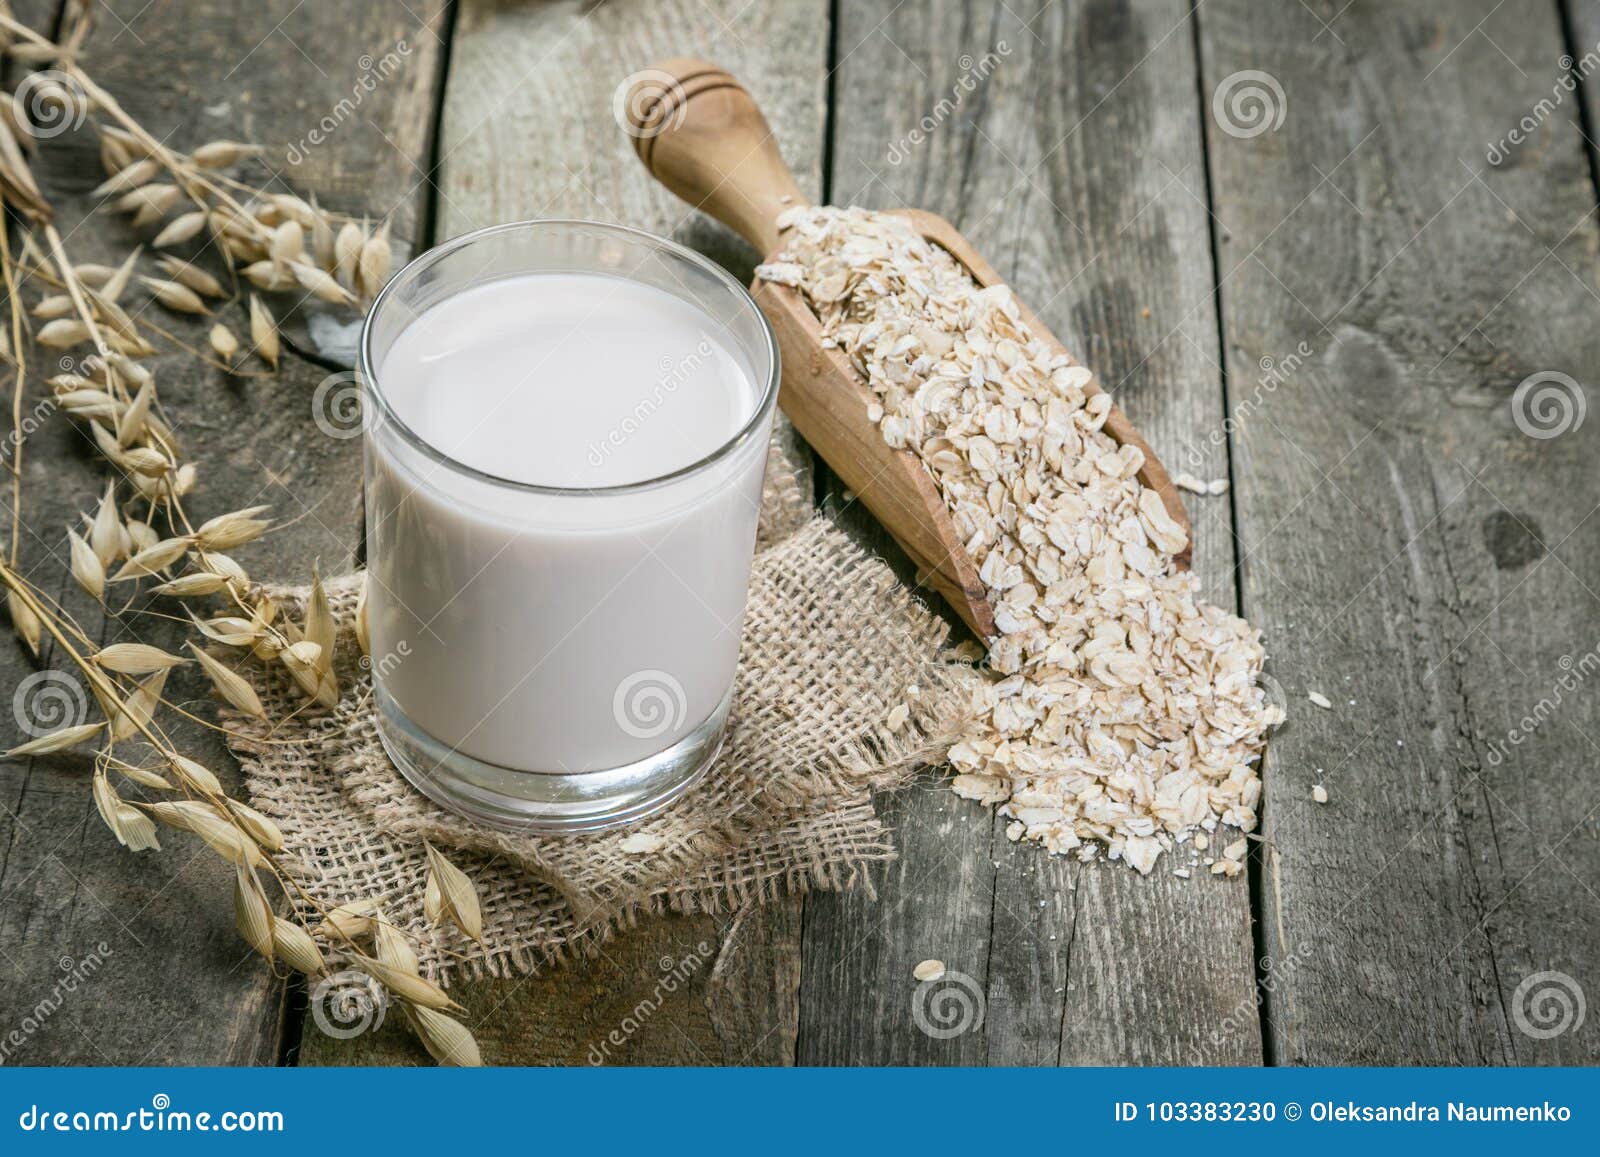 oat milk alternative on rustic wood background